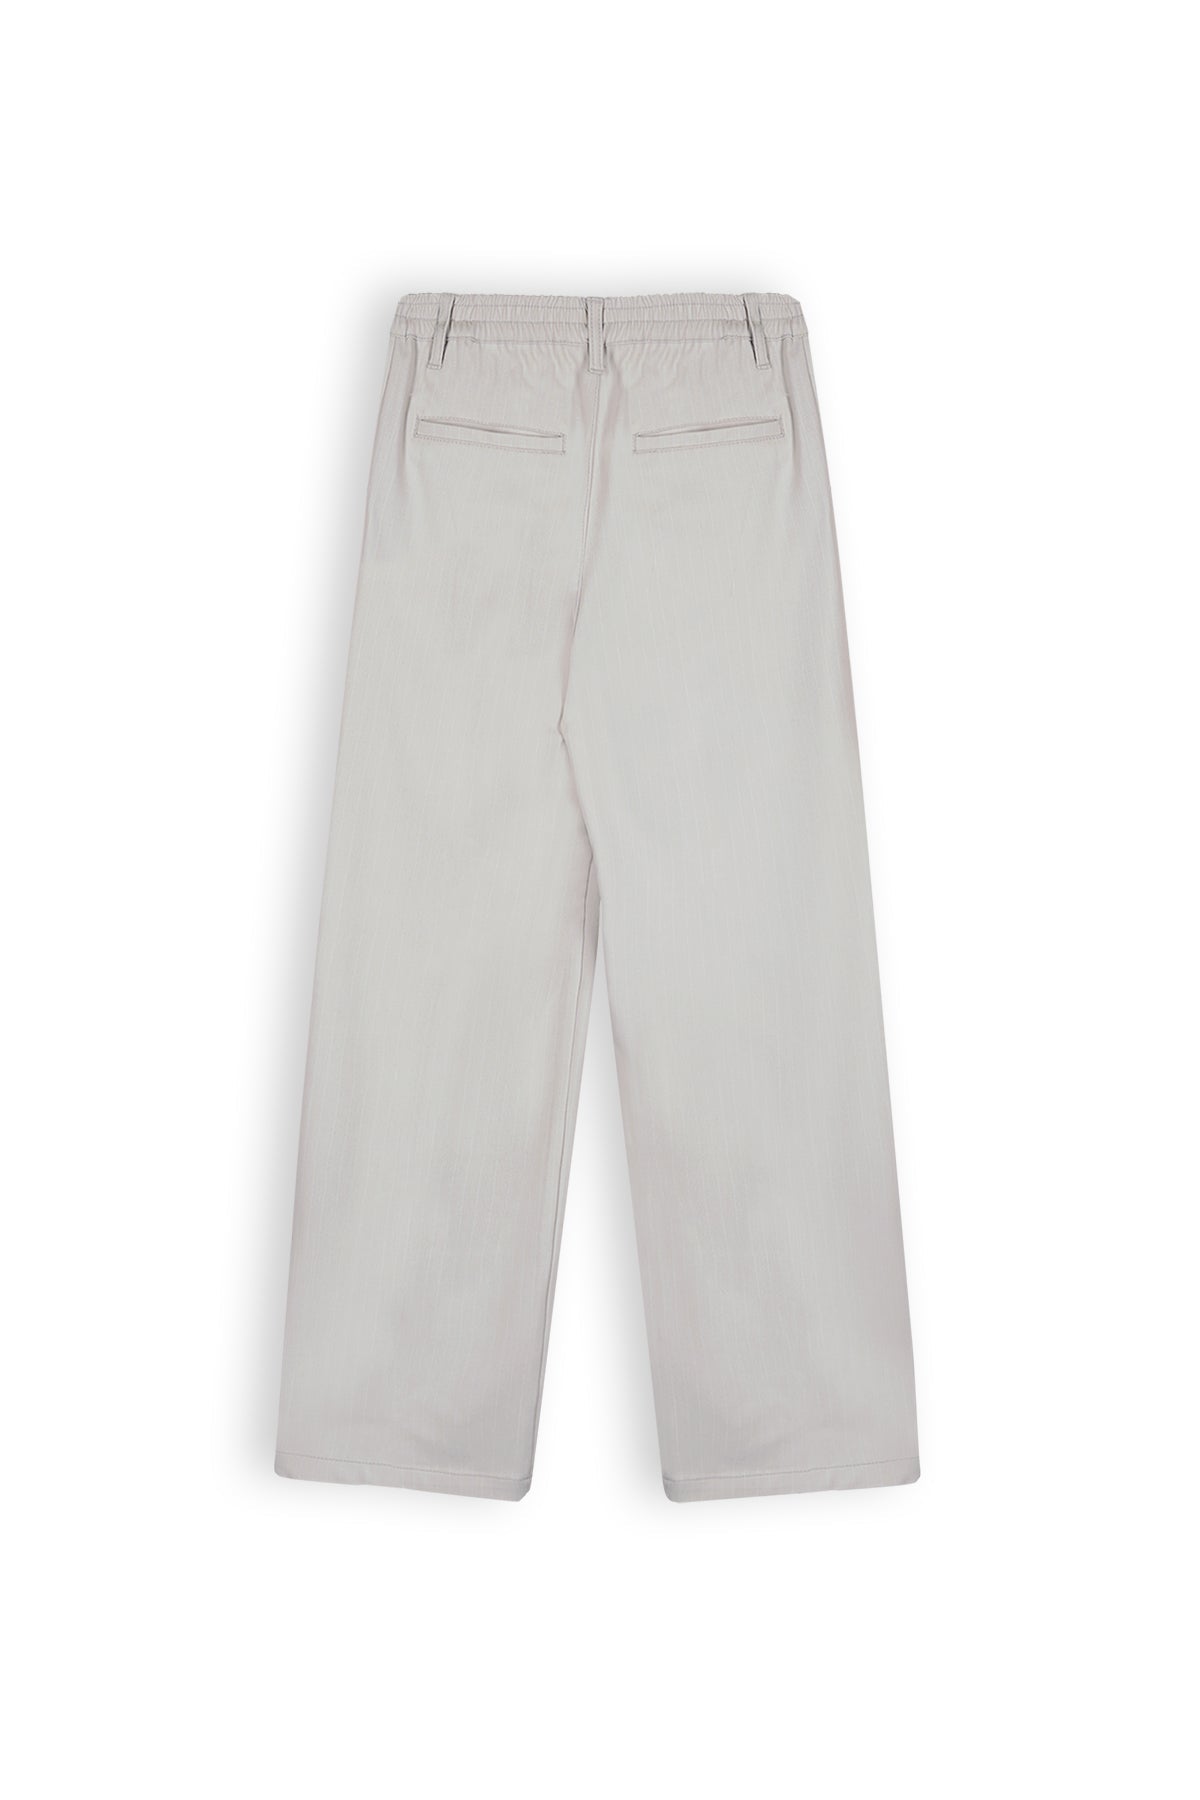 Meisjes Sayla Girls Full Length Wide Pants Silver Grey van NoBell in de kleur Silver Gray in maat 170-176.